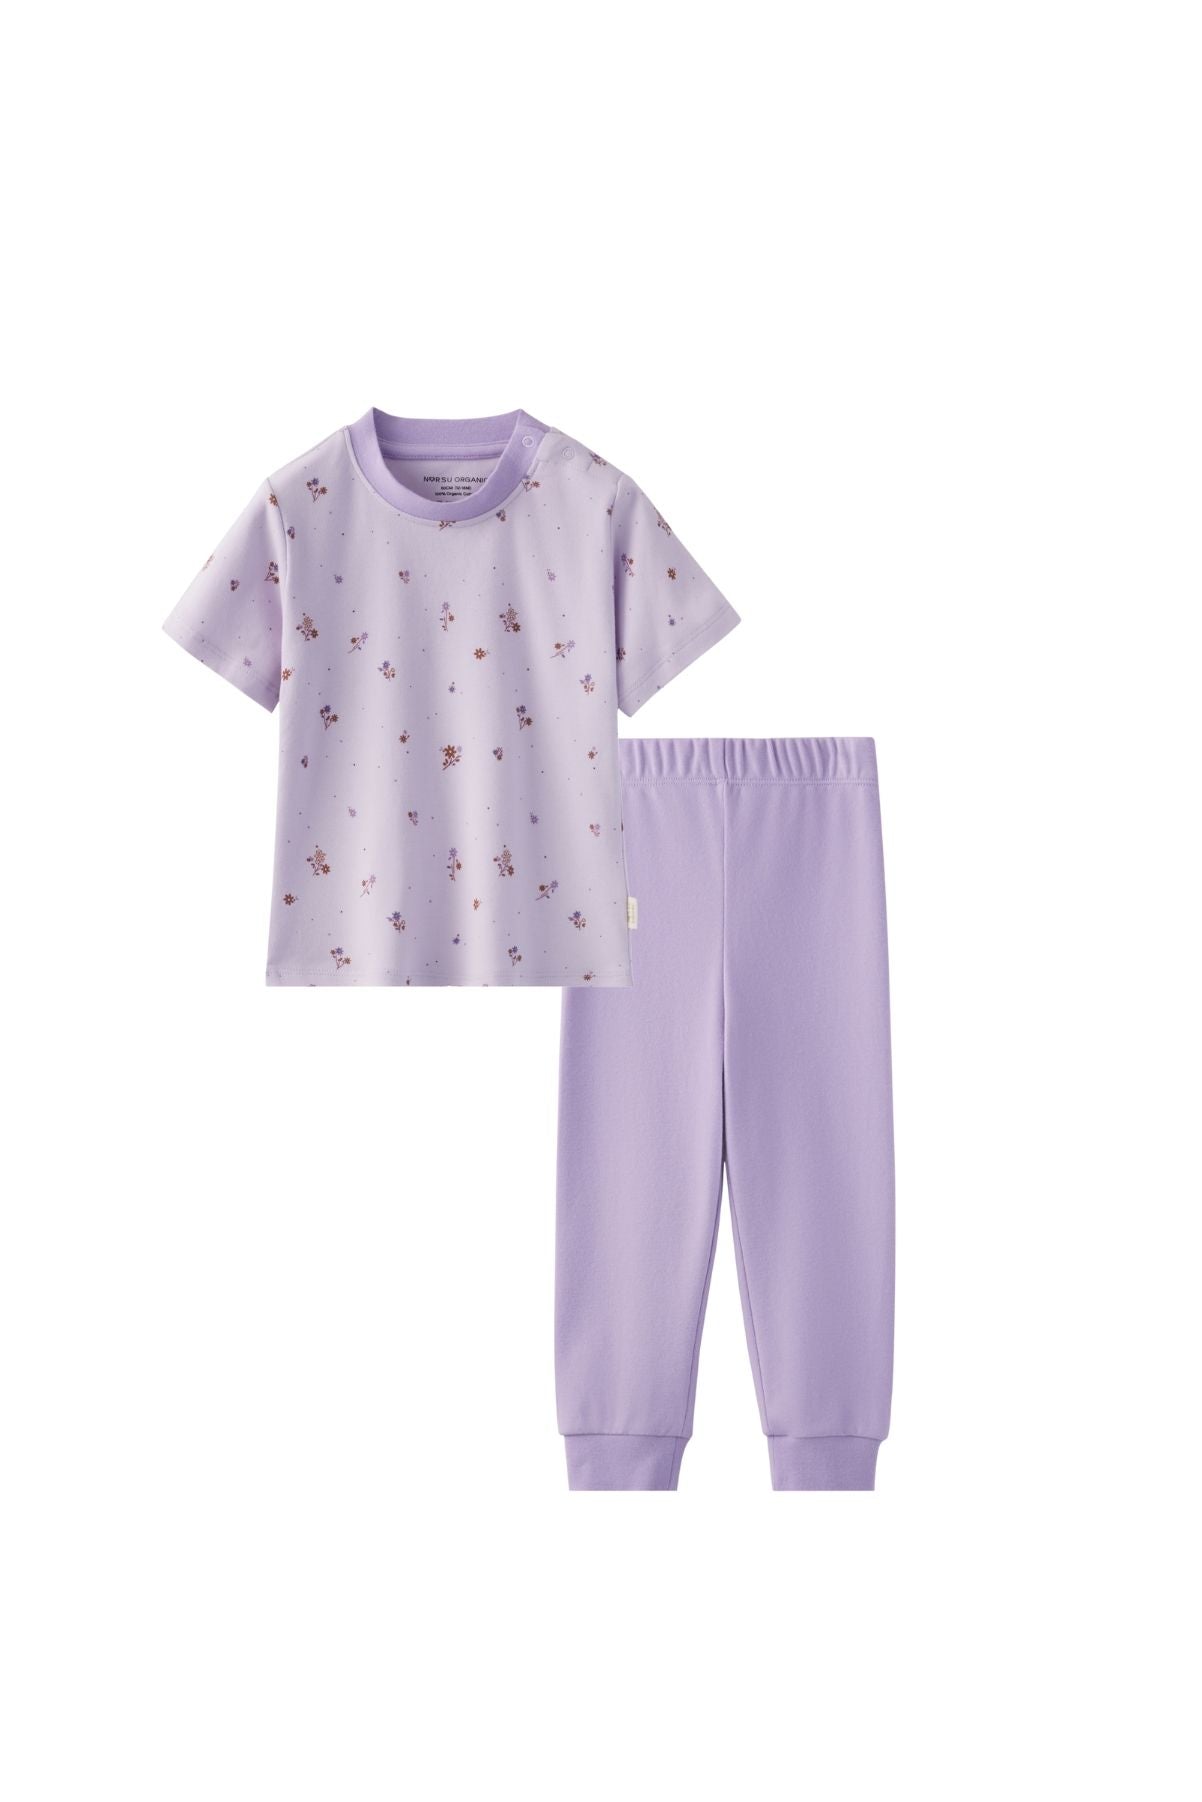 image for Organic Toddler Pajama Sets-Violet